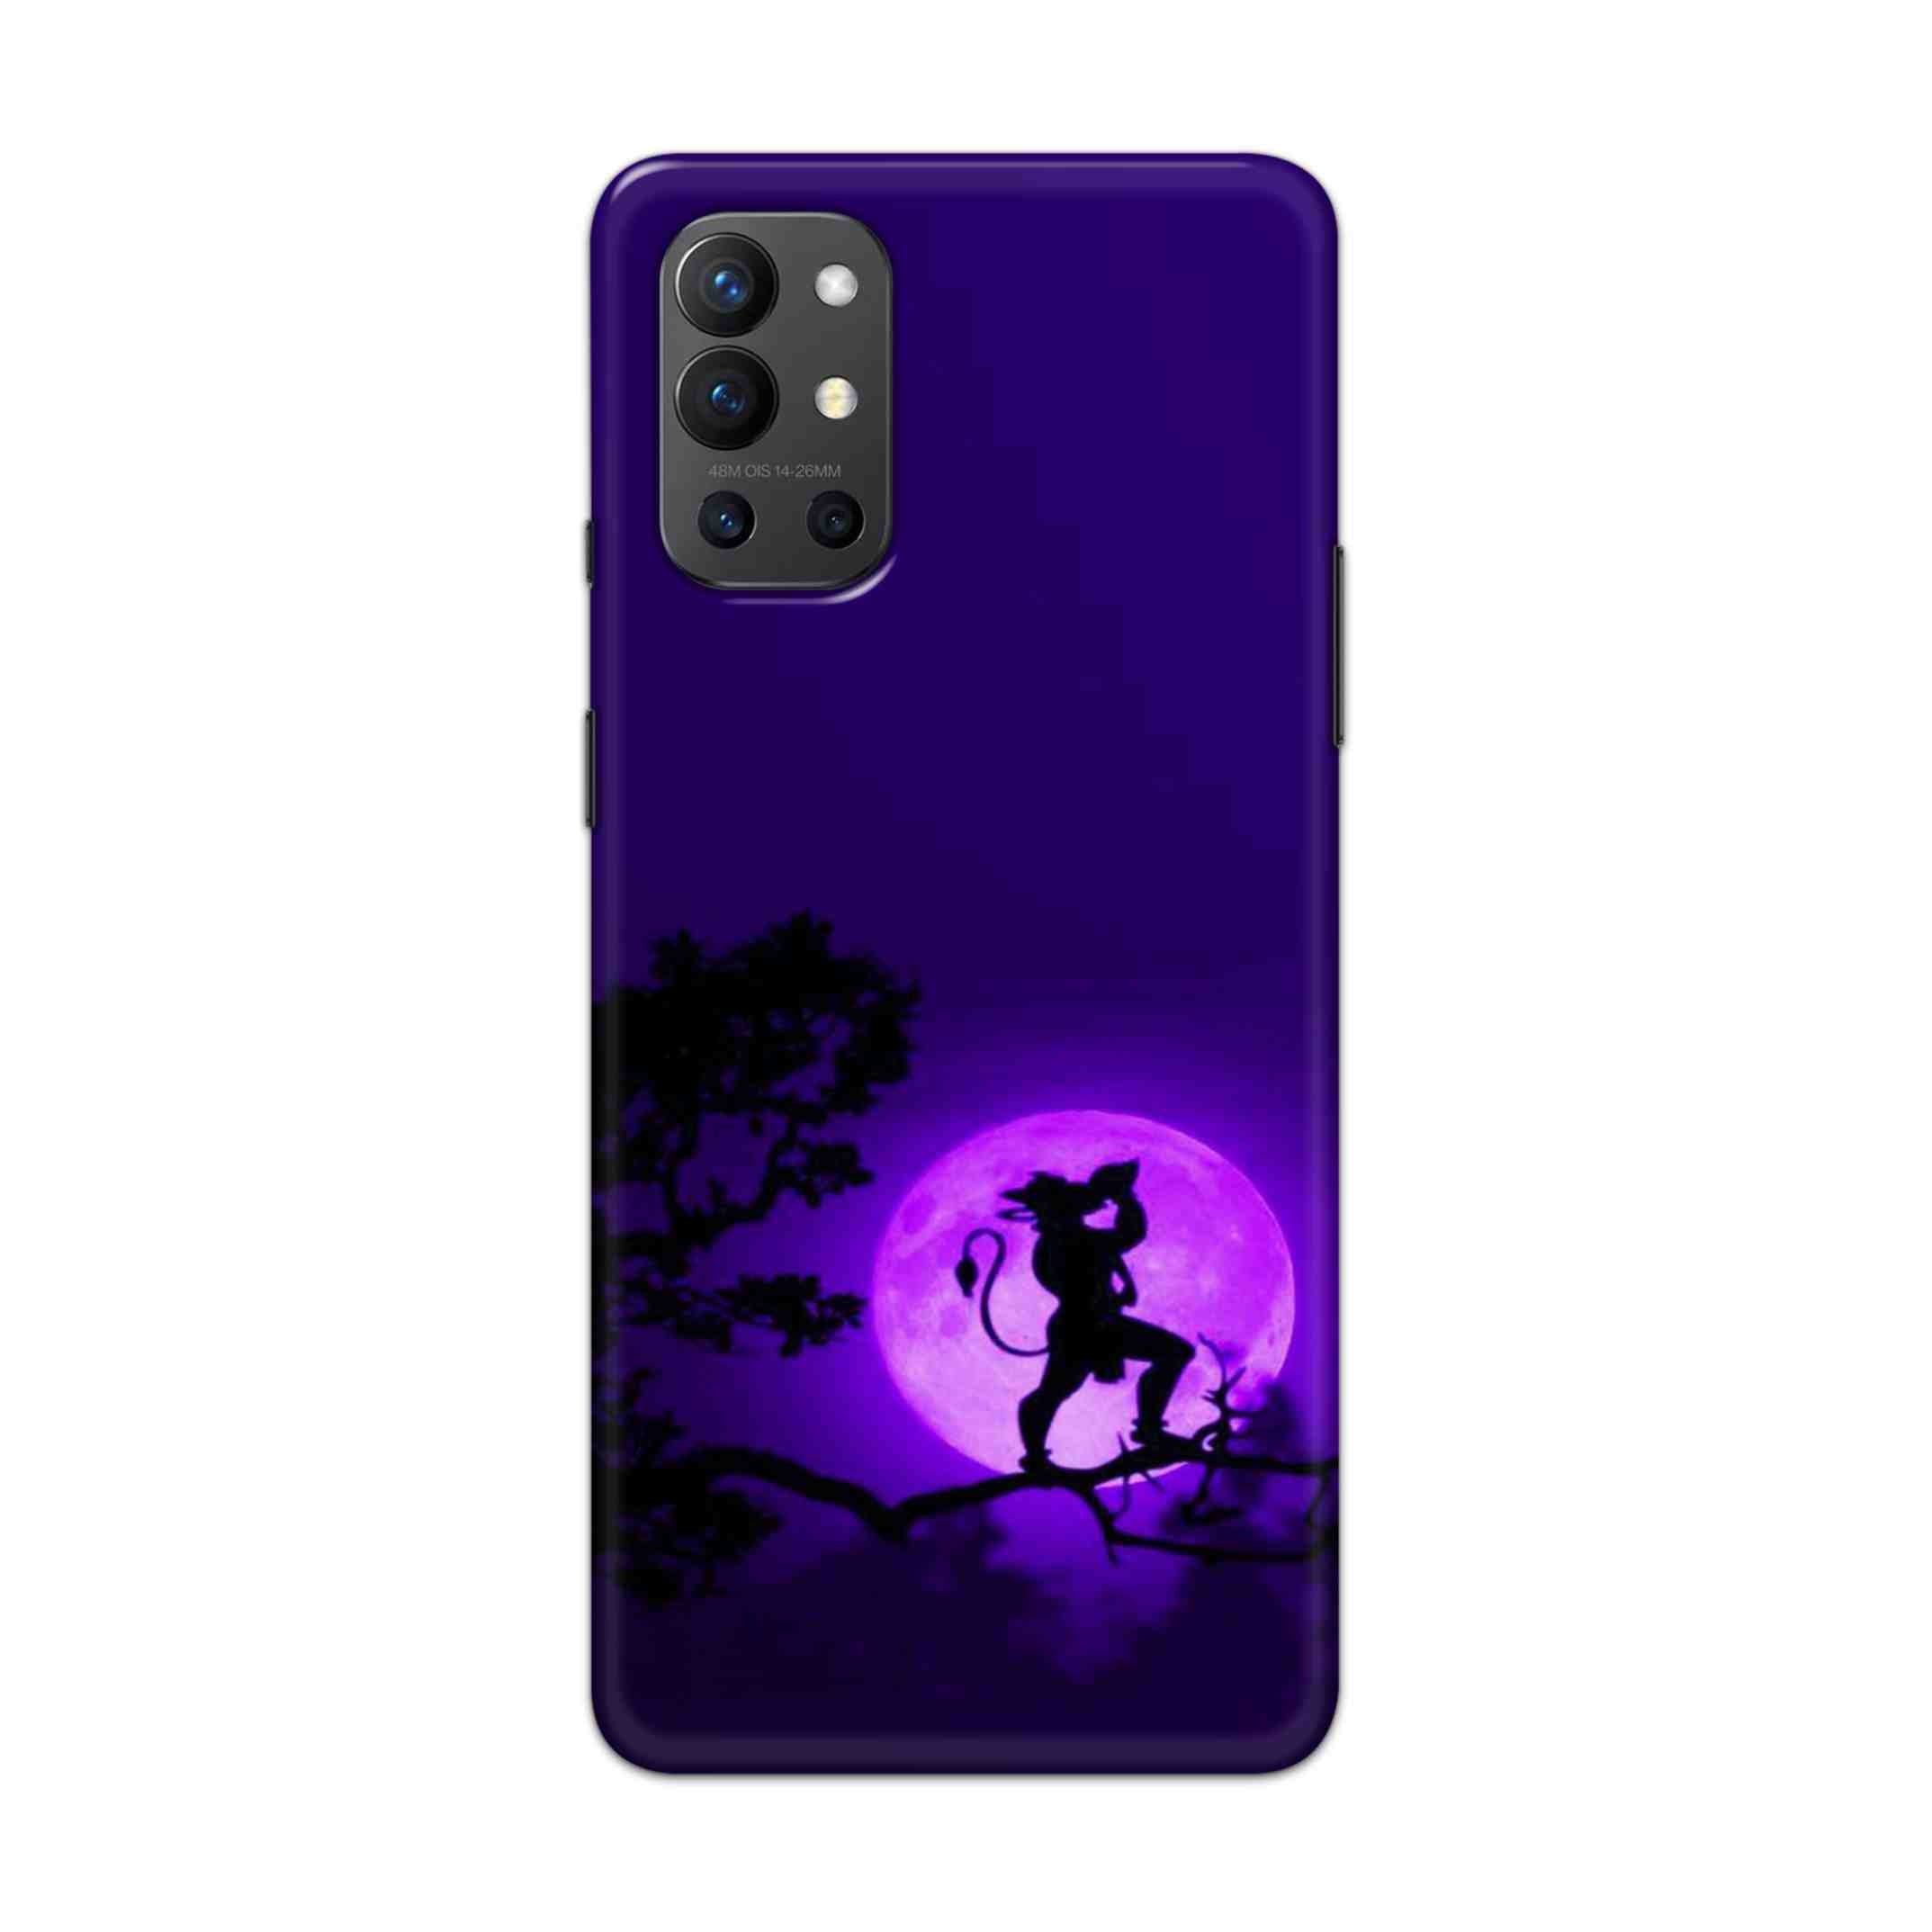 Buy Hanuman Hard Back Mobile Phone Case Cover For OnePlus 9R / 8T Online